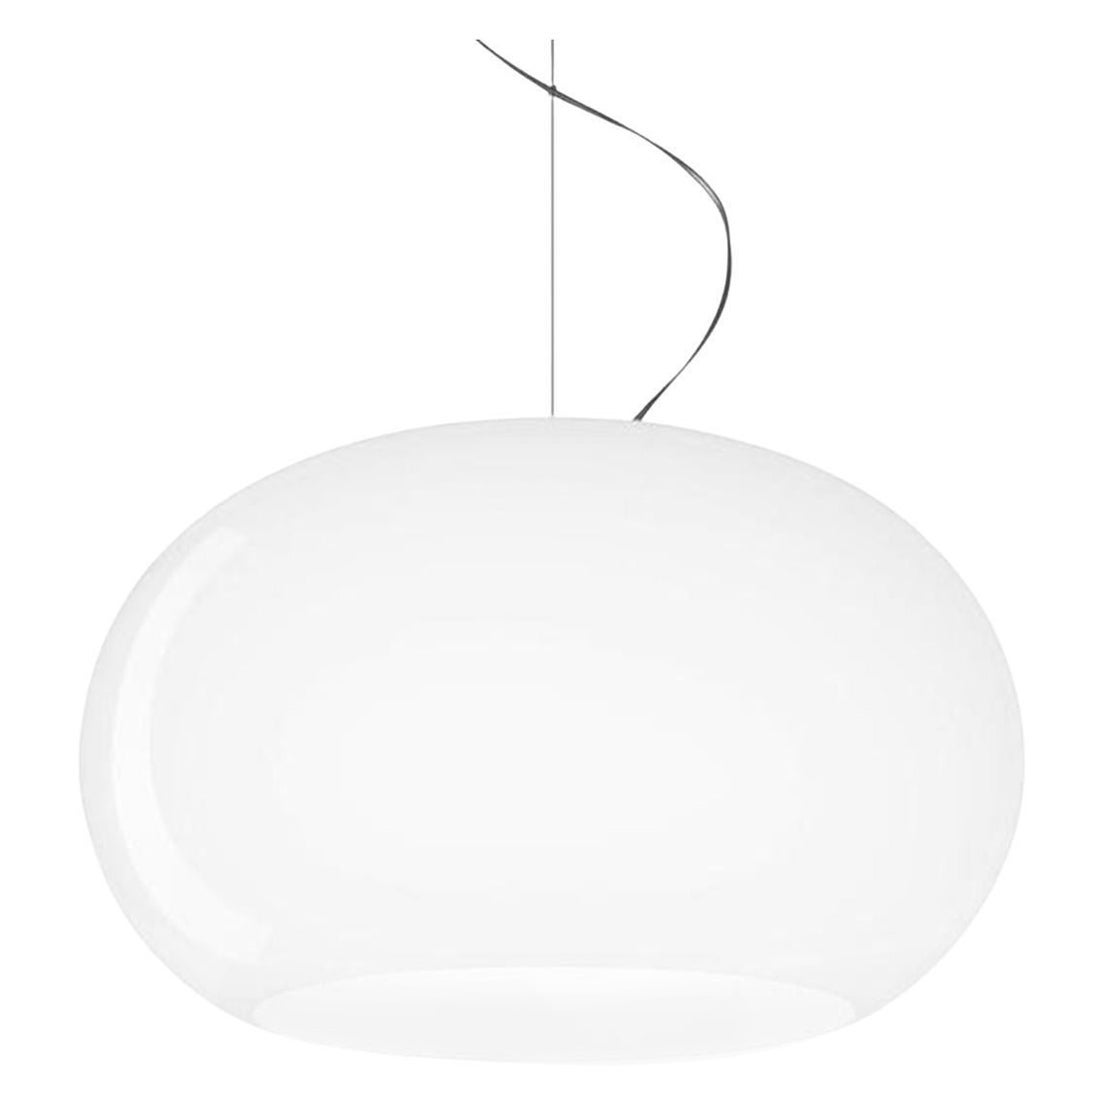 Rodolfo Dordoni ‘Buds 2’ Handblown Glass Led Pendant Lamp in White for Foscarini